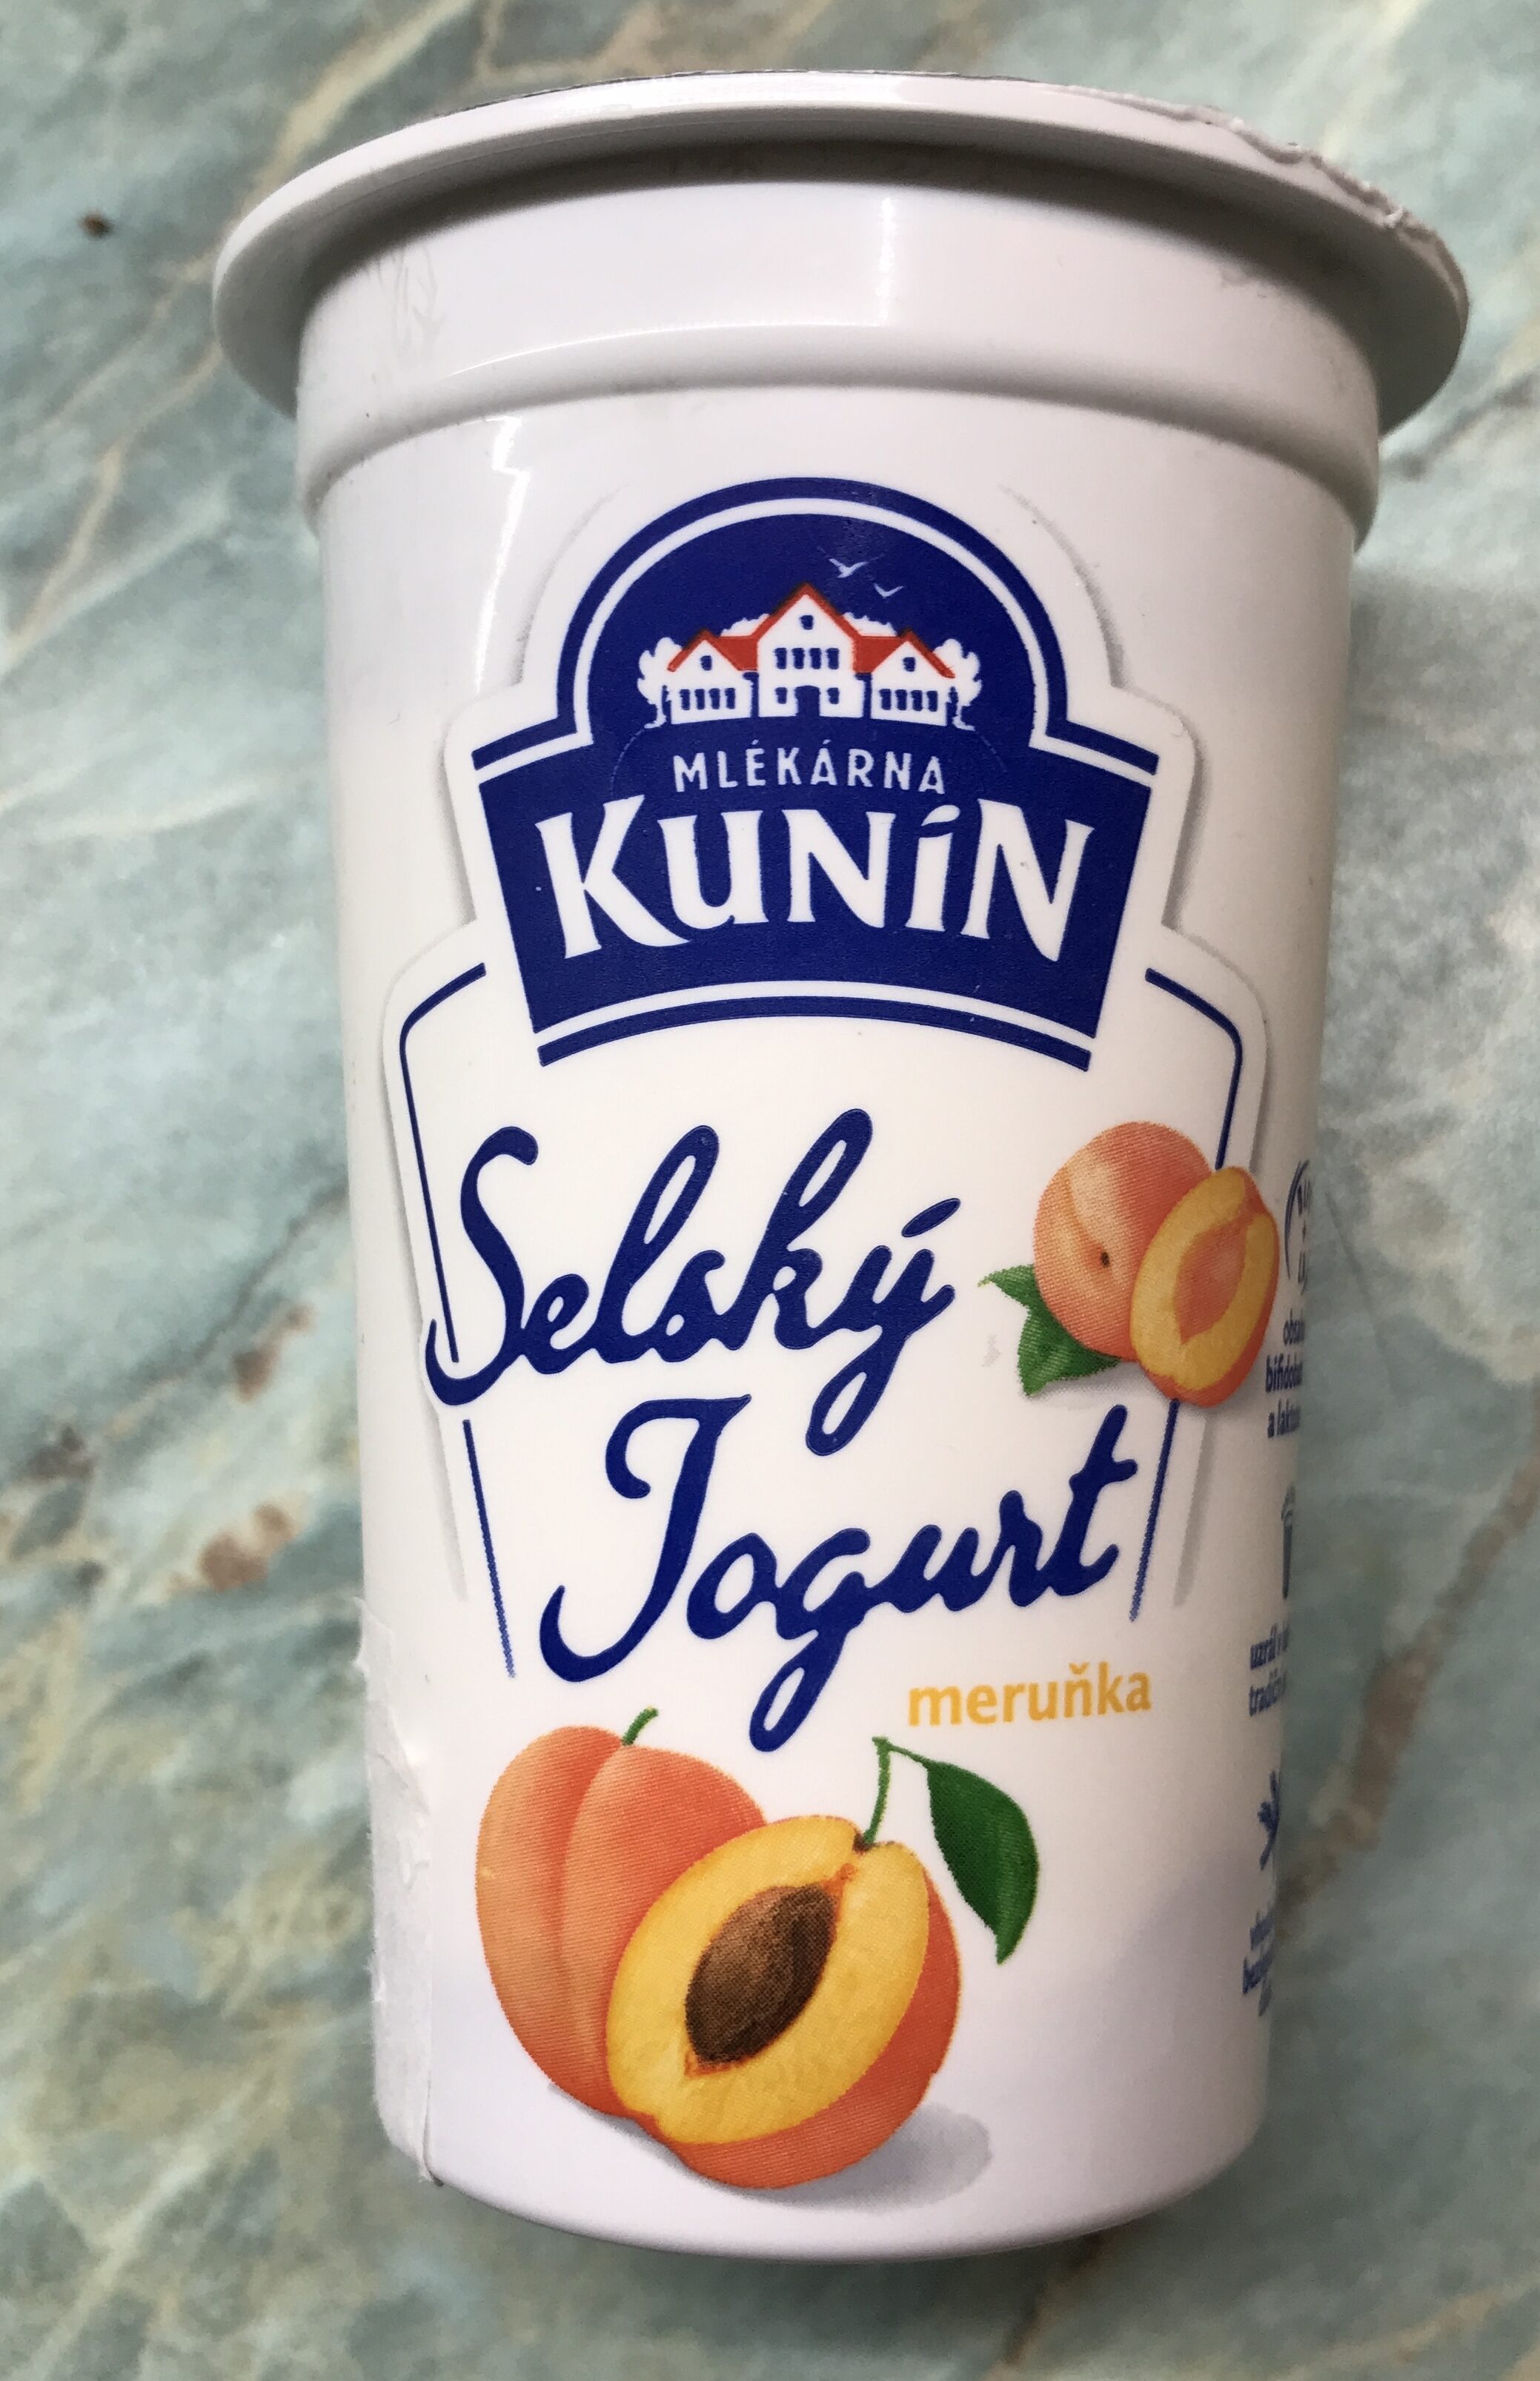 Selský jogurt meruňka - Product - cs